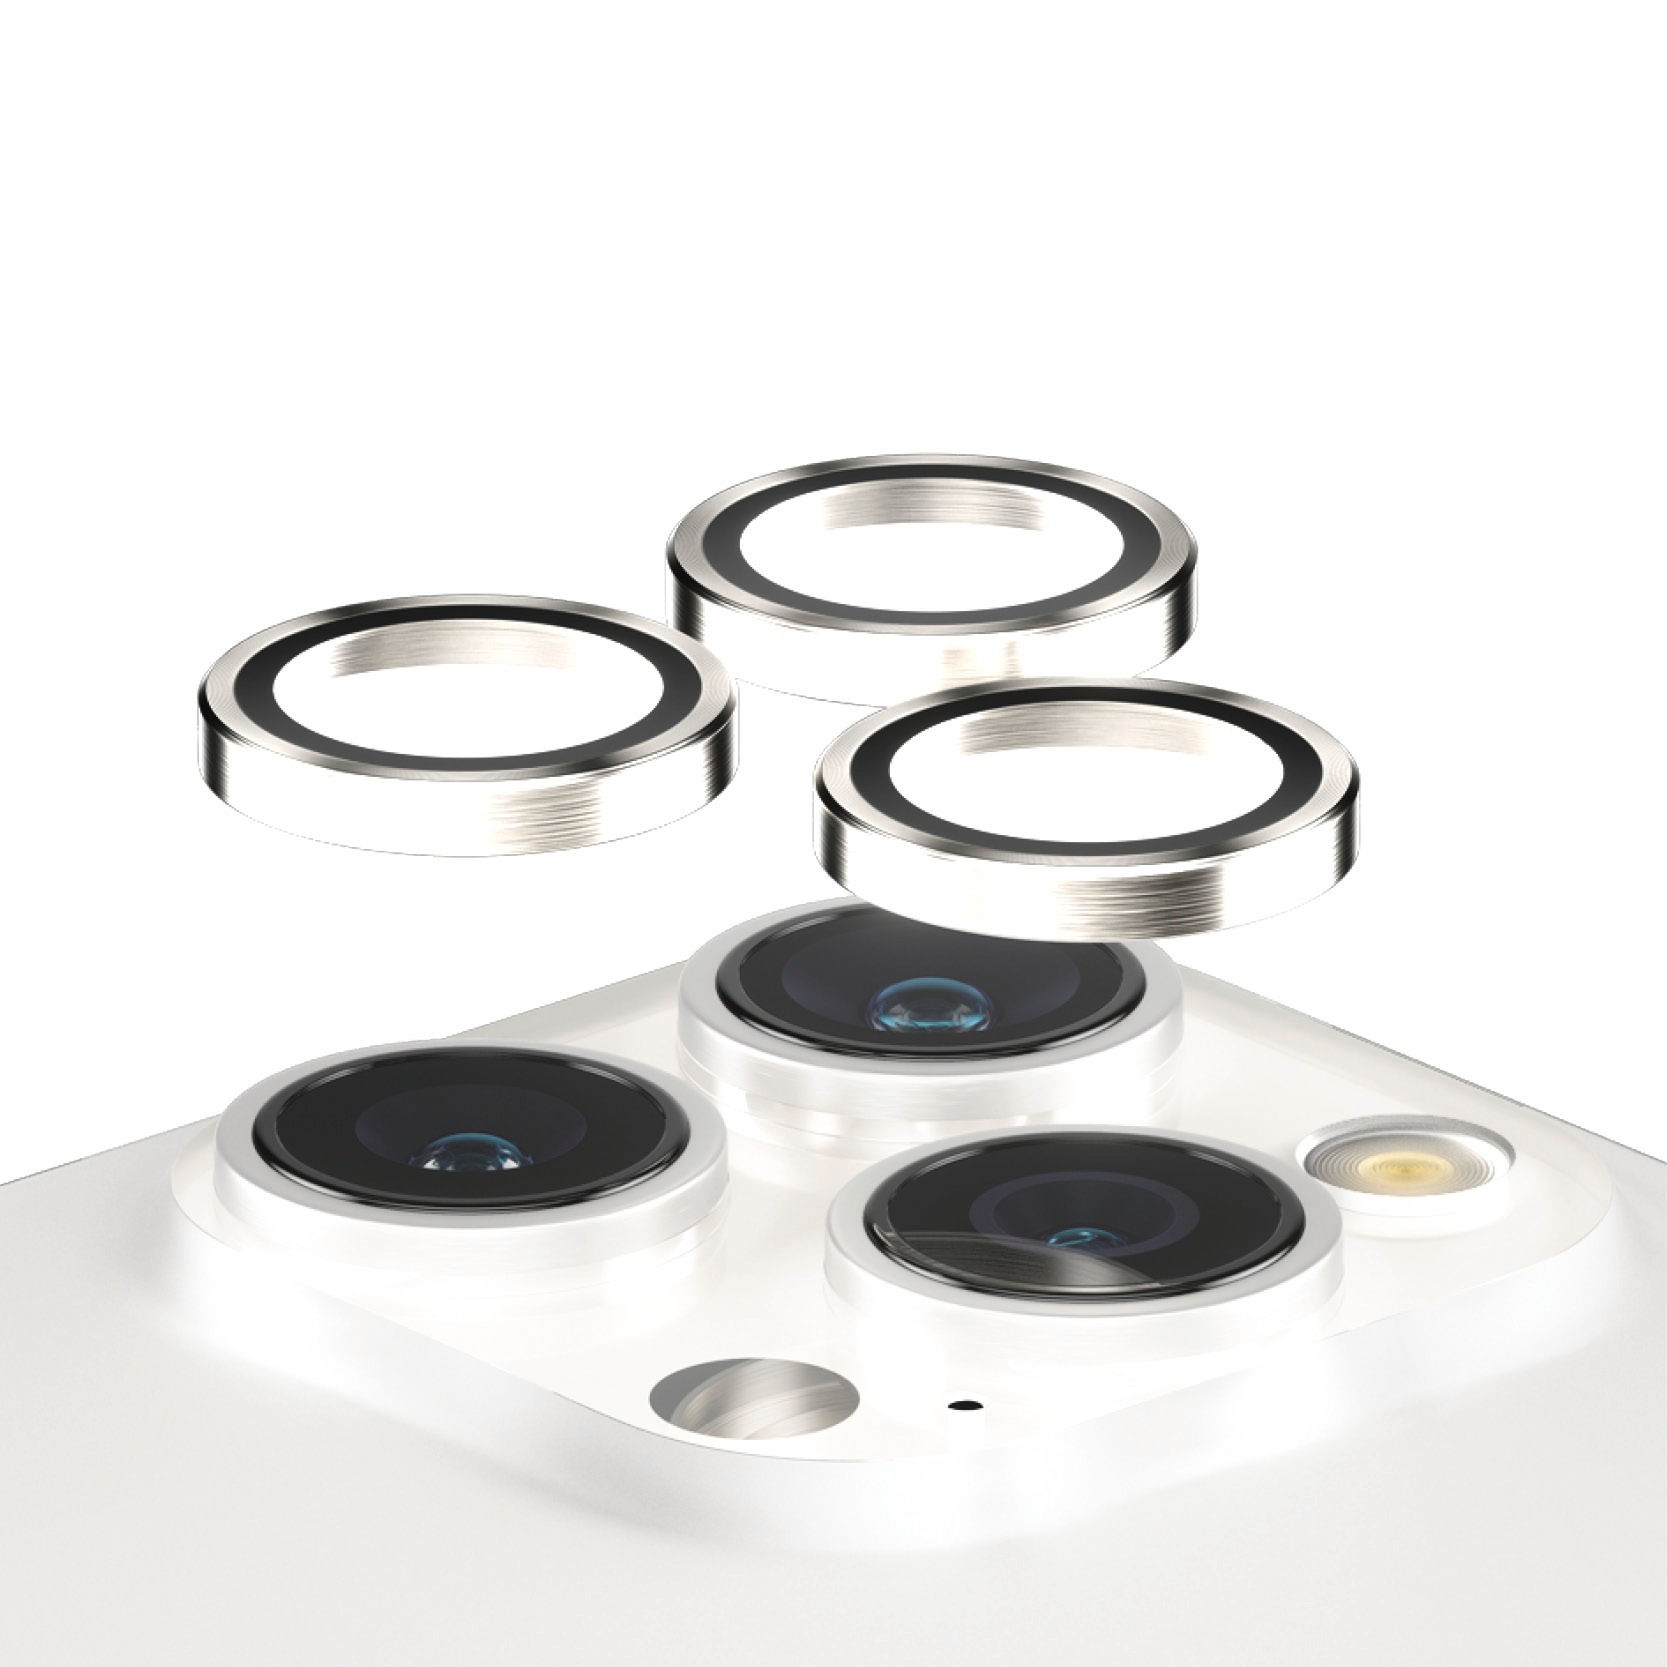 PanzerGlass Kameraschutzglas »Hoops Camera Protector Metal«, für Apple iPhone 15 Pro-Apple iPhone 15 Pro Max